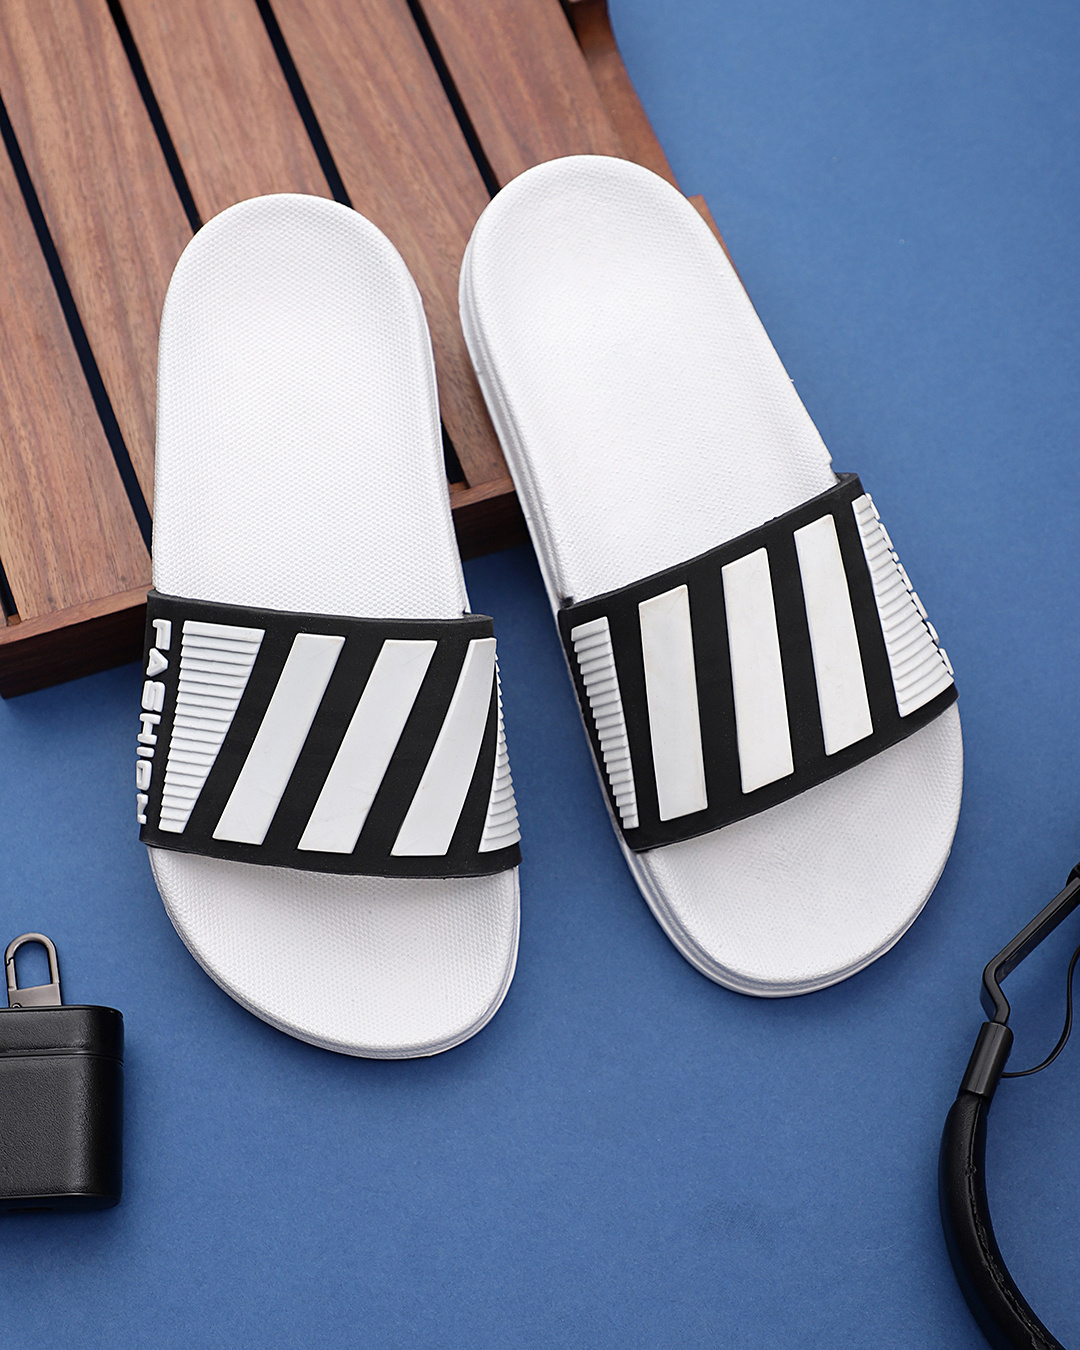 Buy Men's White & Black Striped Sliders Online in India at Bewakoof